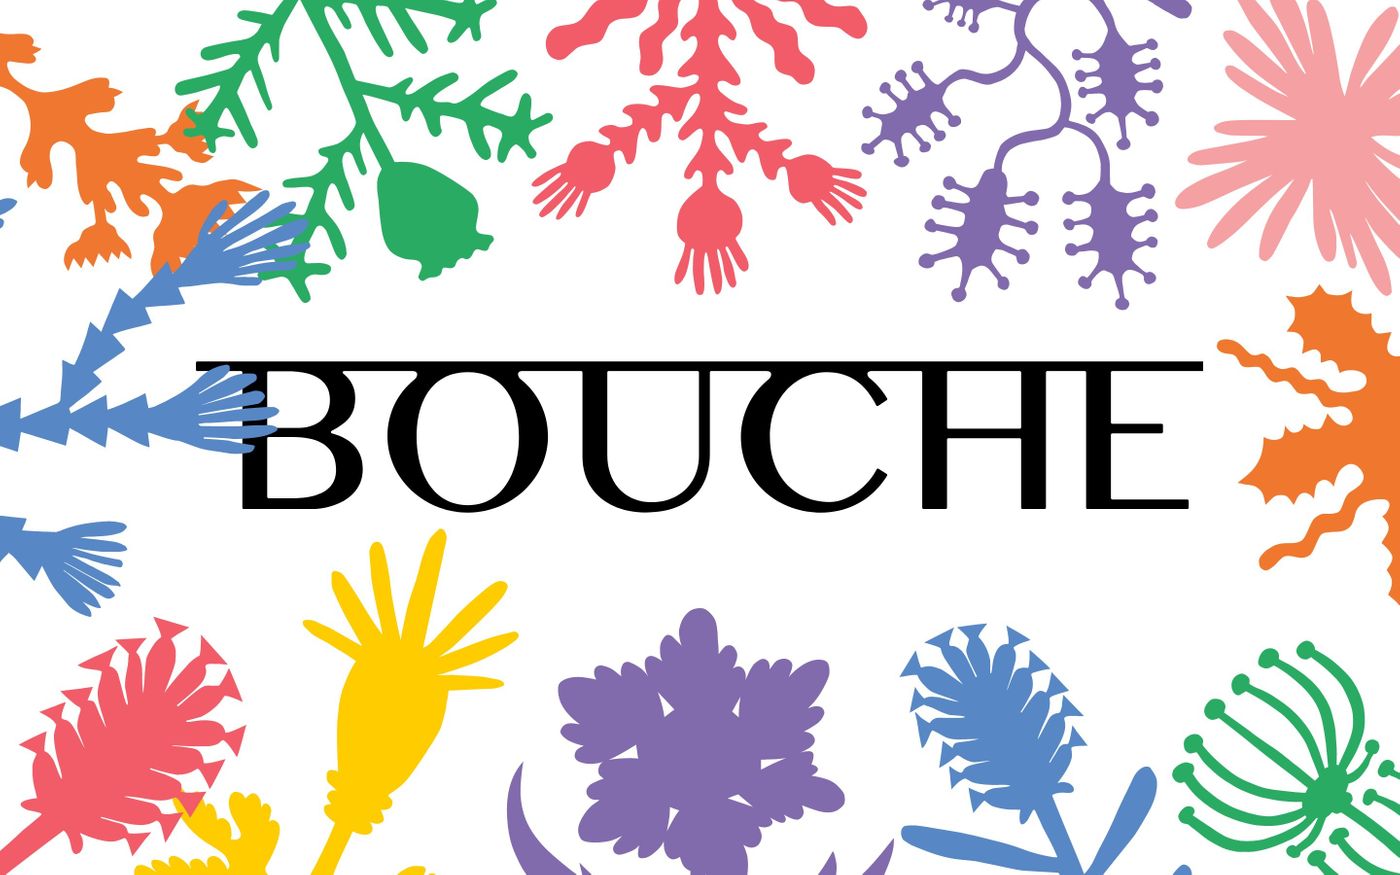 Screenshot of Bouche website